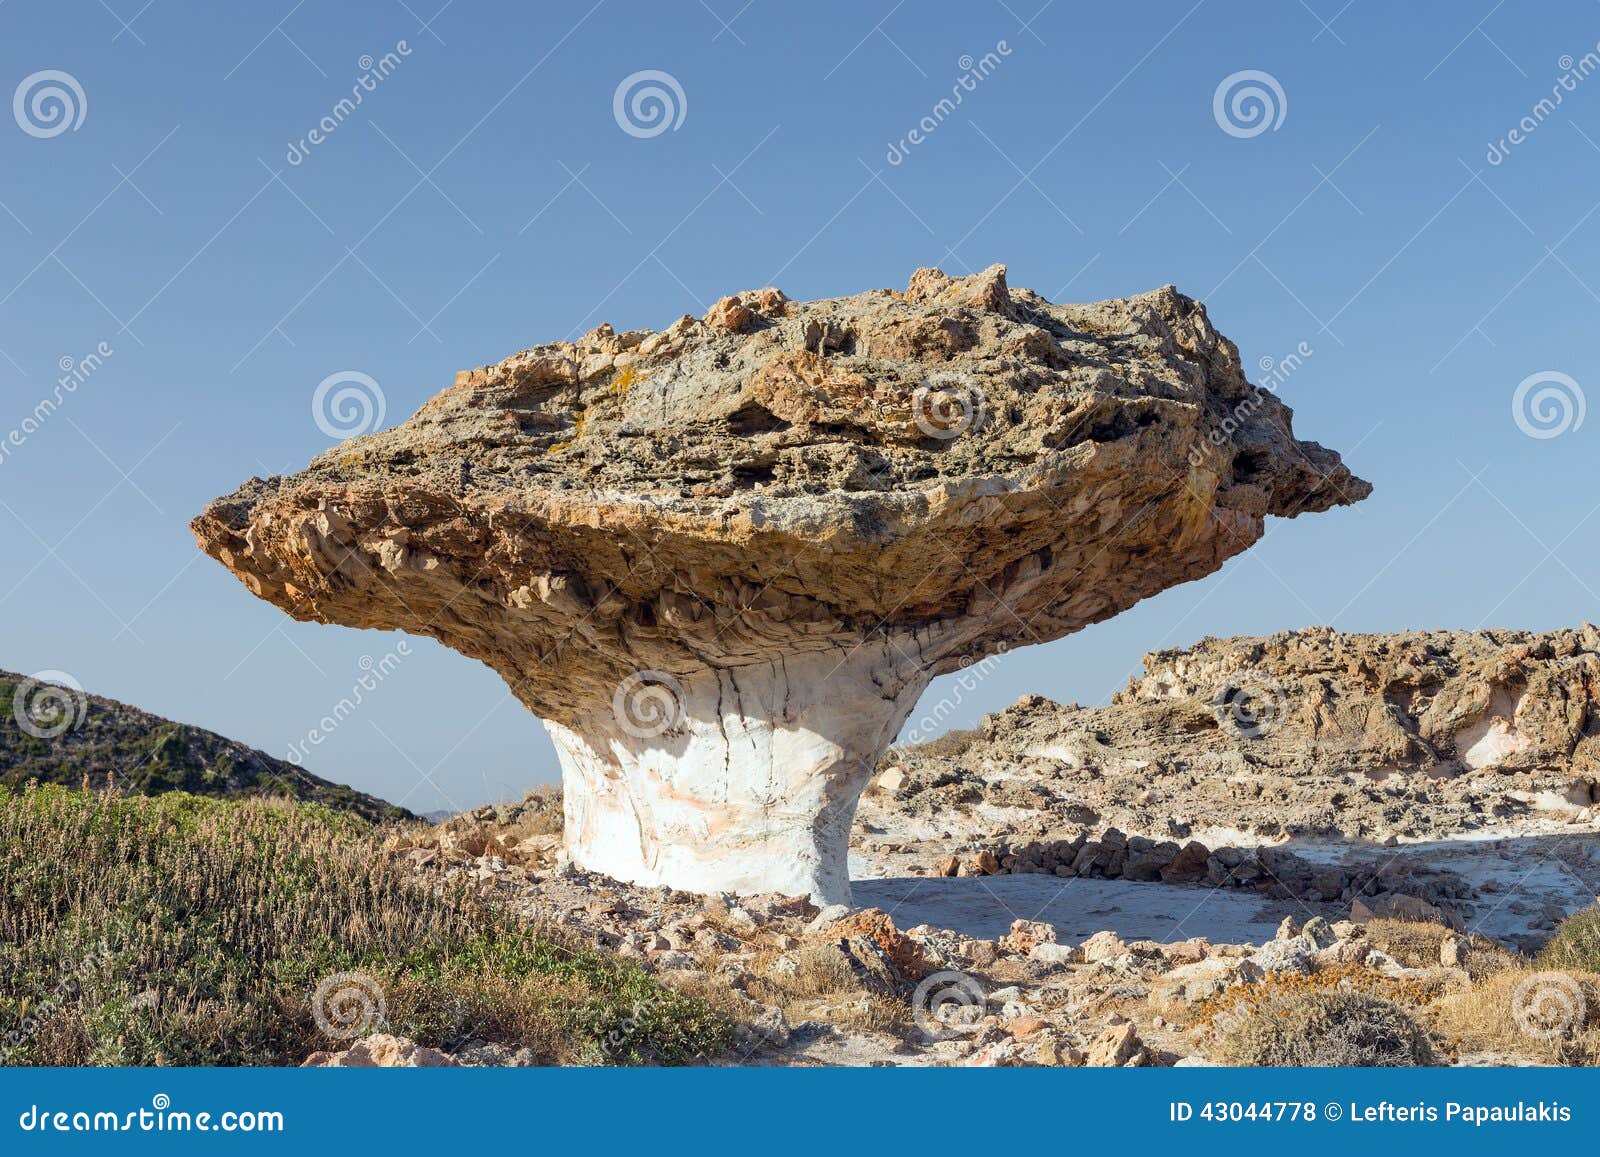 skadi stone, kimolos island landmark, cyclades, greece